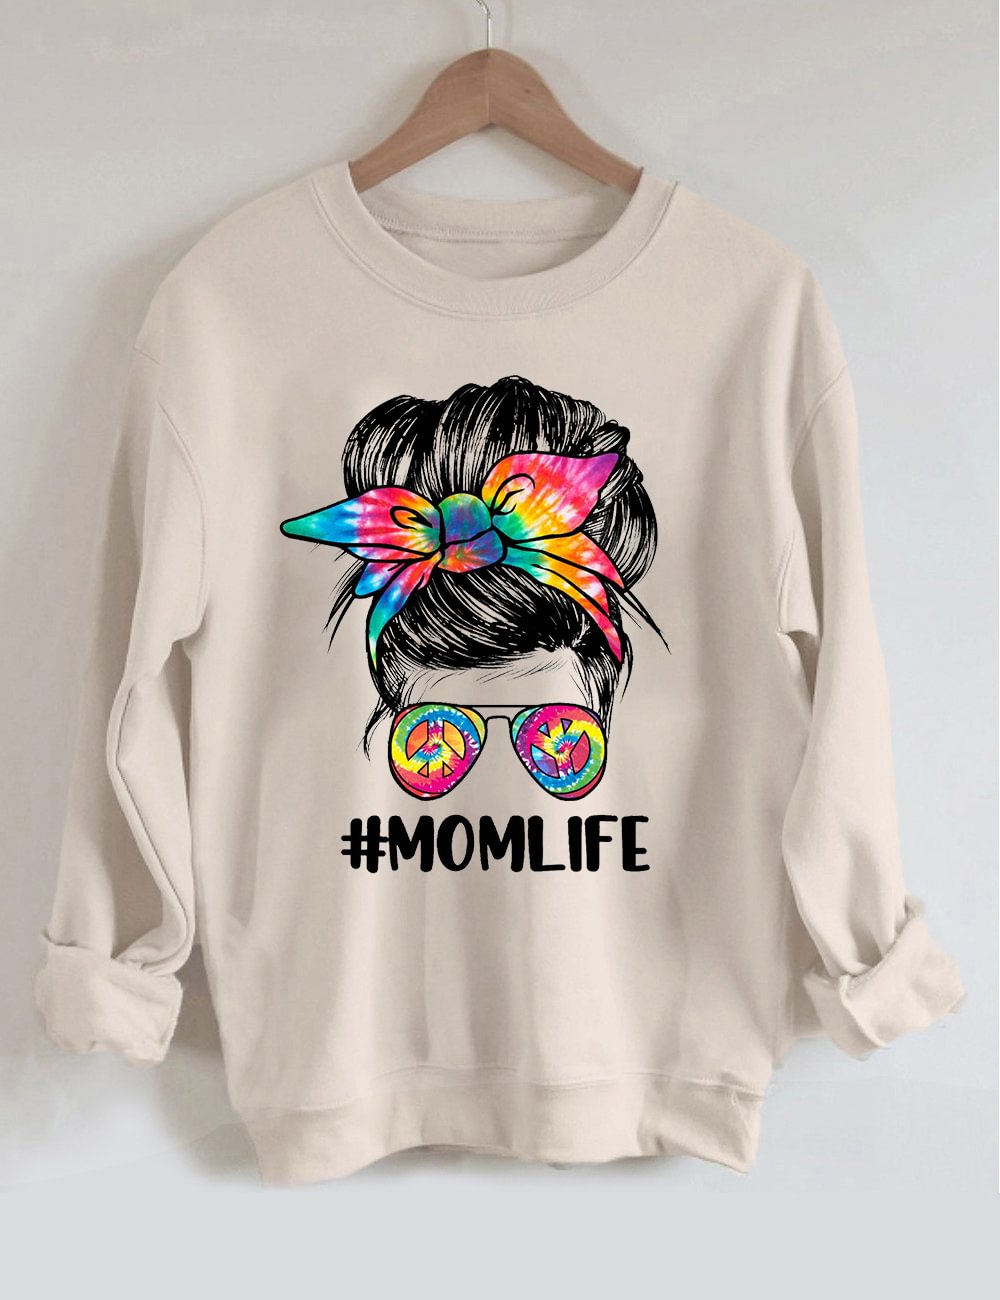 Mom Life Sweatshirt